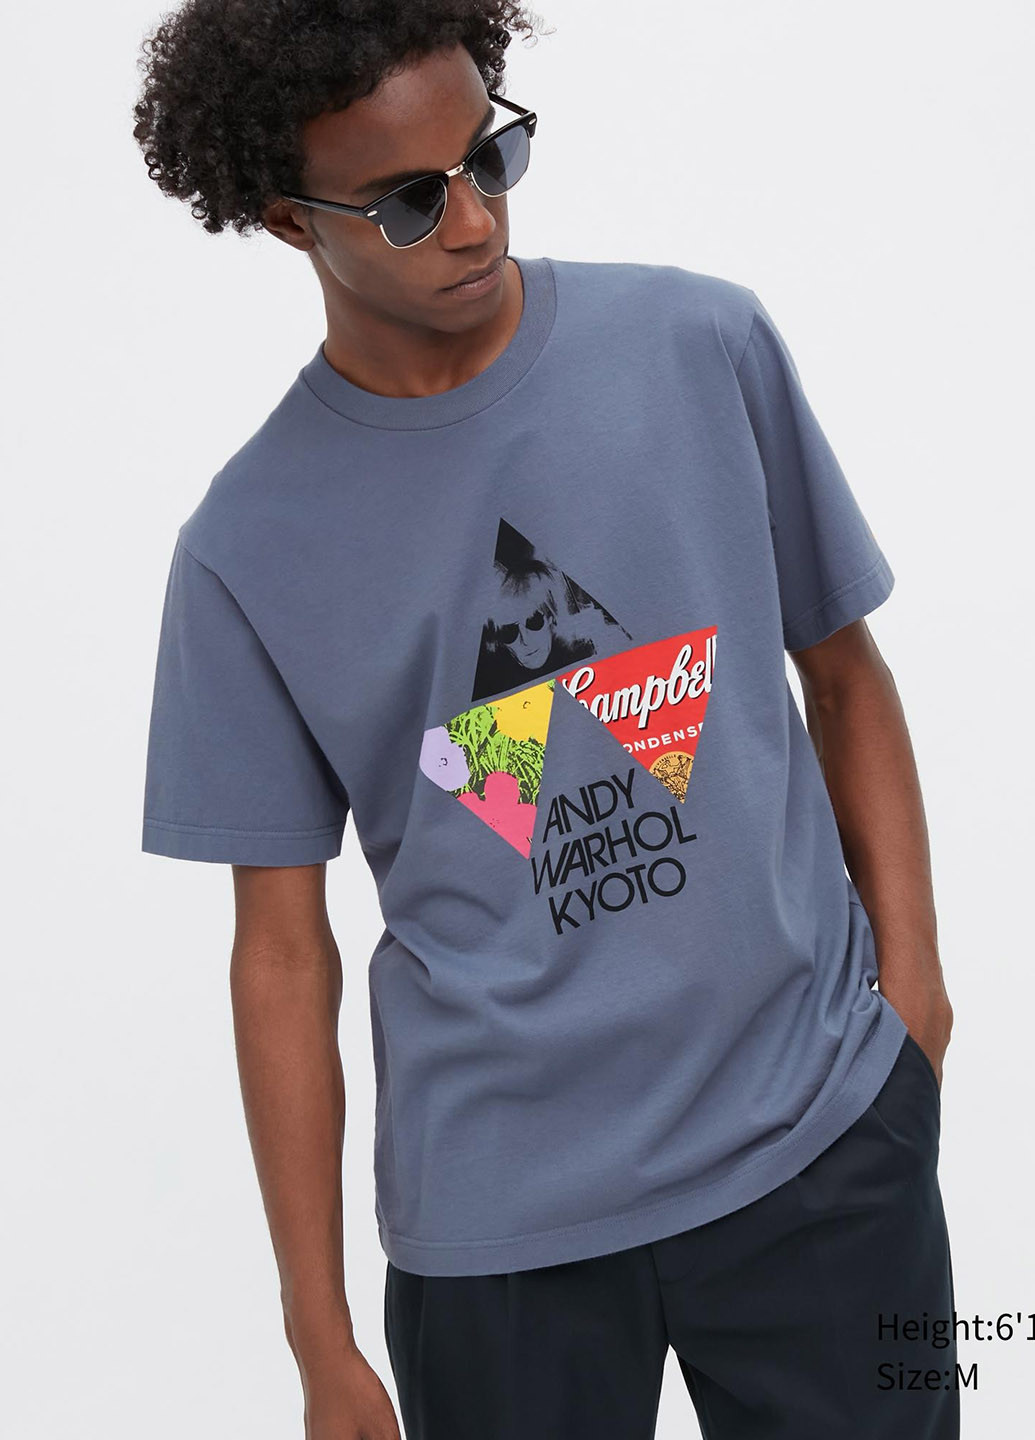 Серая футболка Uniqlo